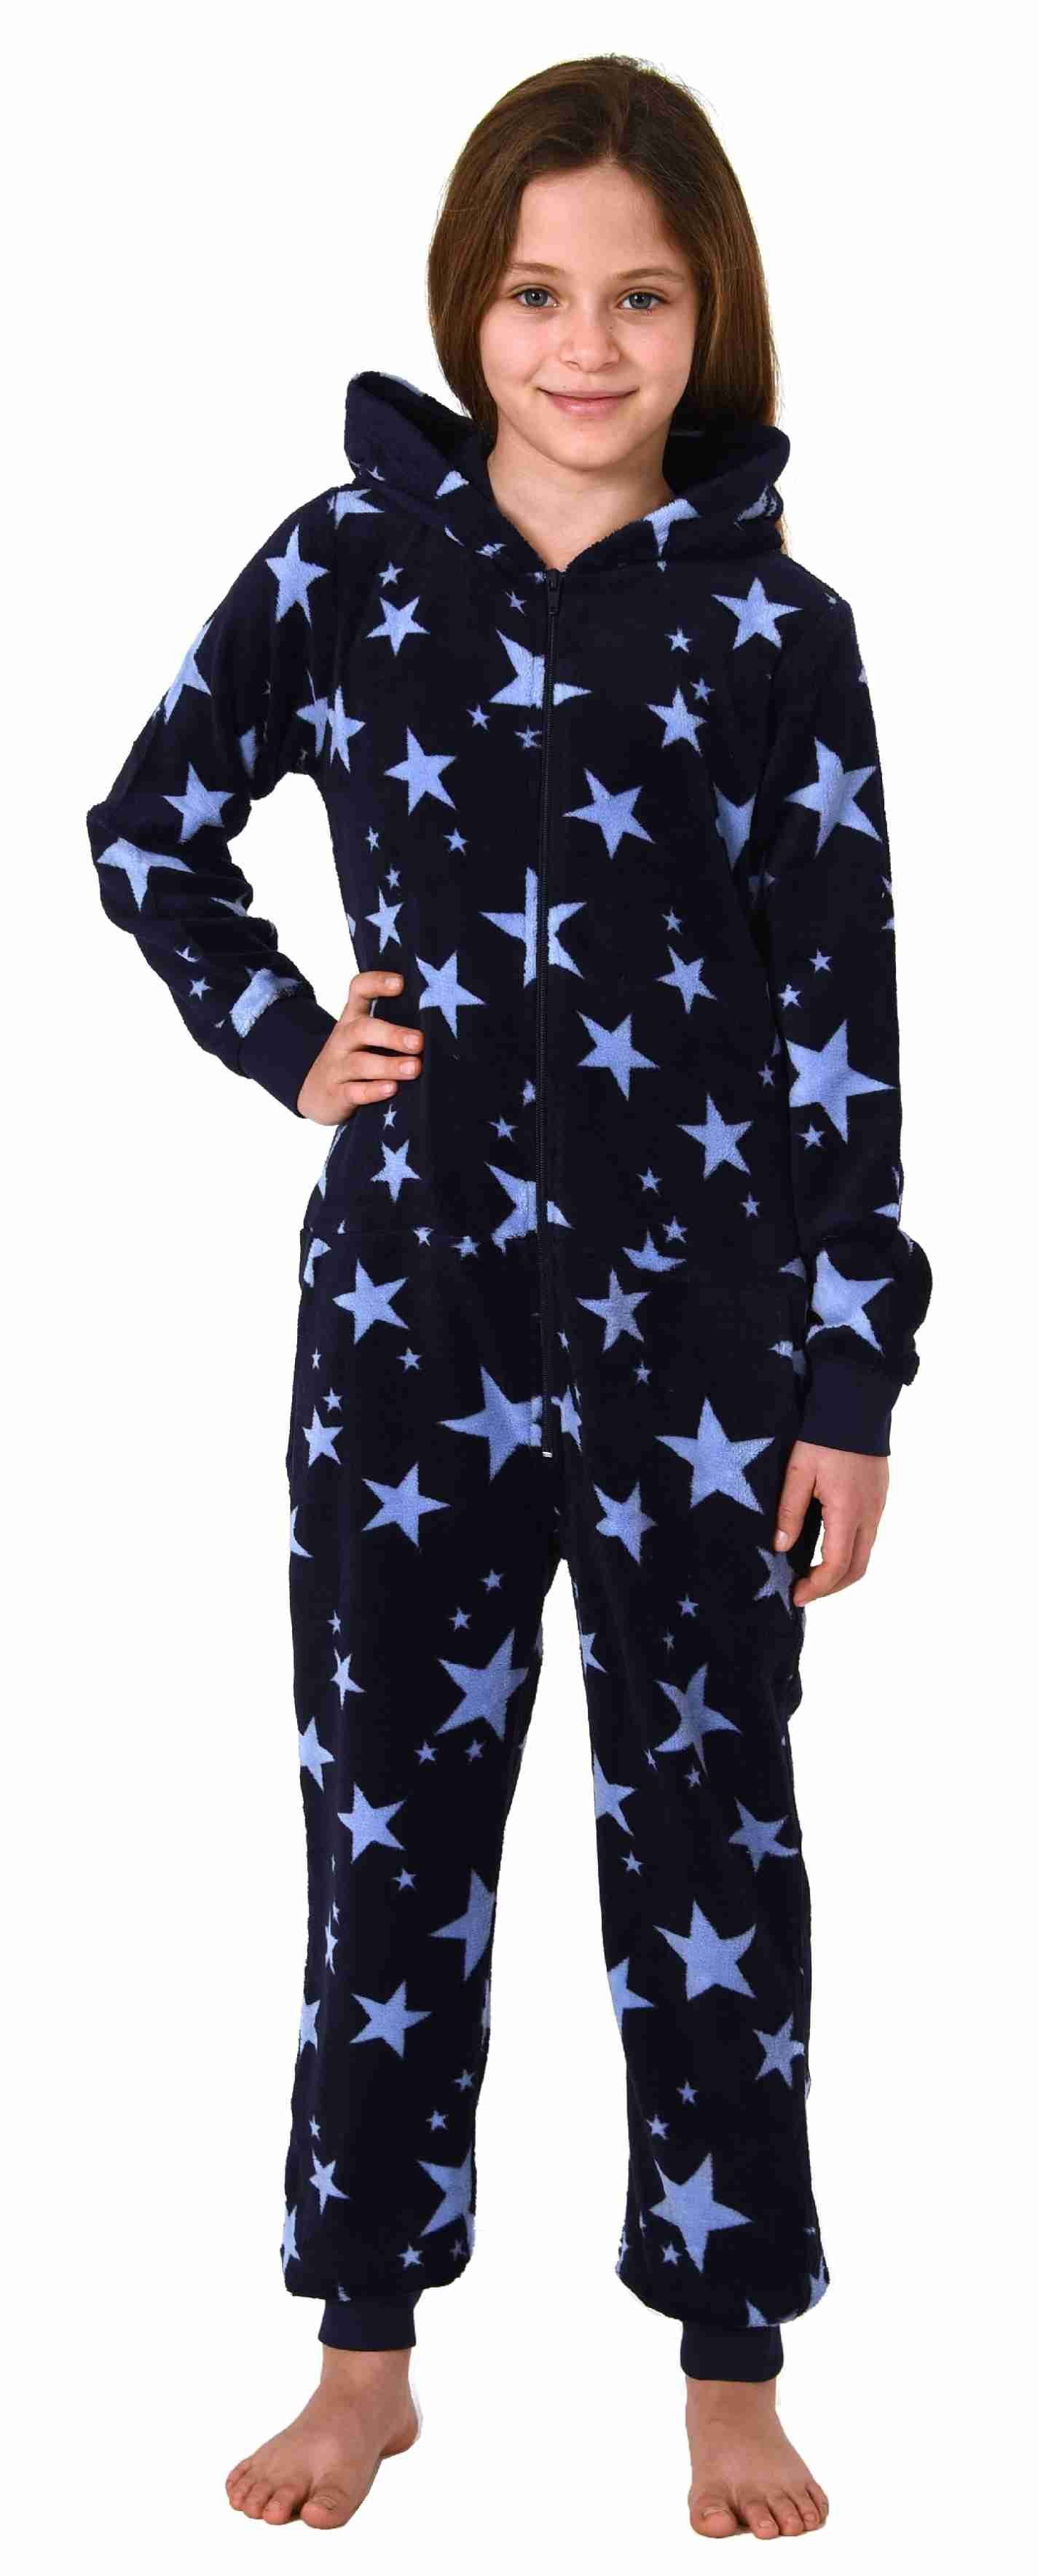 Normann Pyjama Mädchen Jumpsuit Overall Schlafanzug langarm in Sterne Optik marine